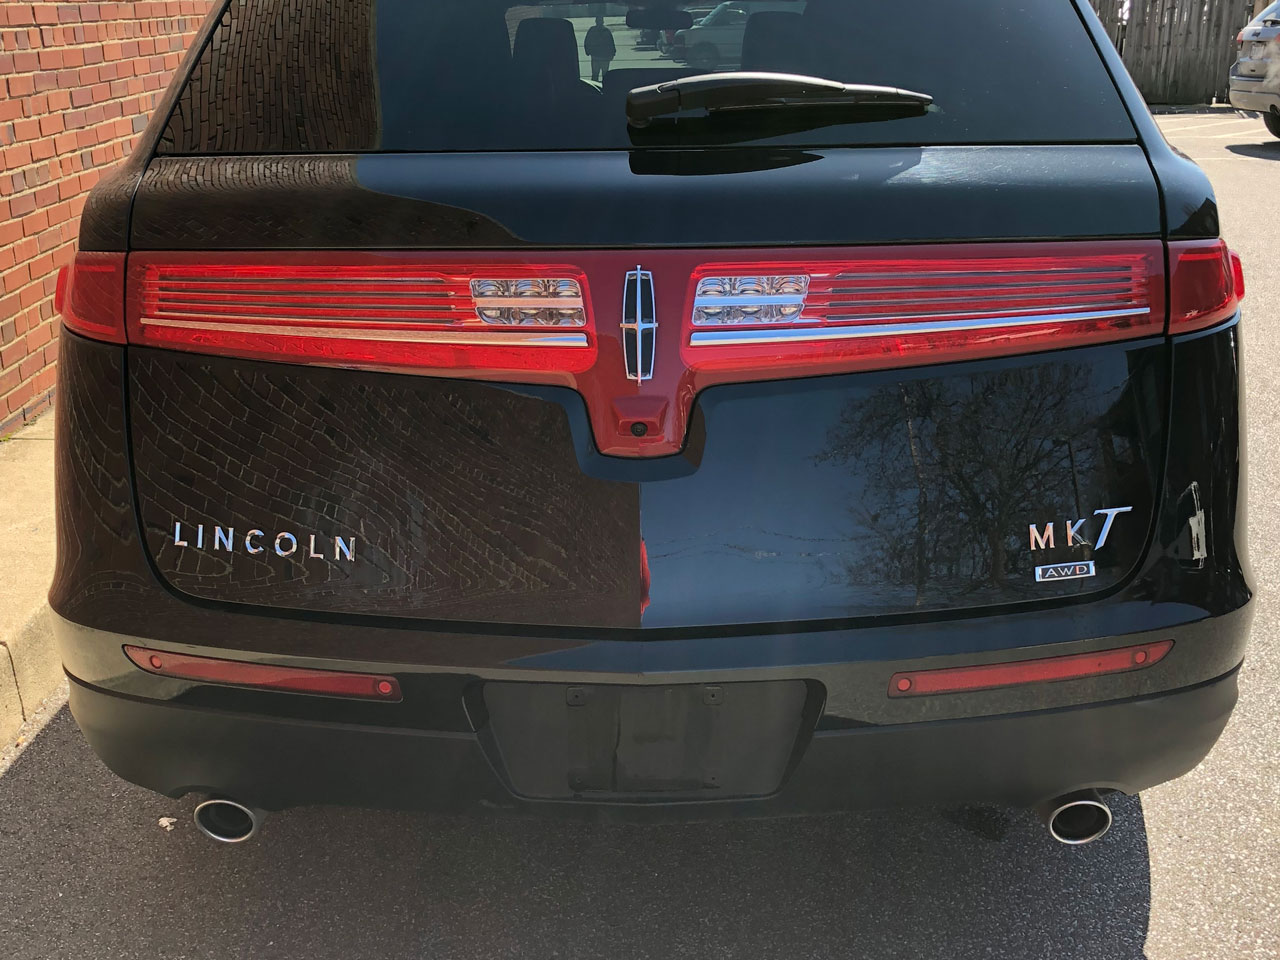 2019 Eagle Coach Company Lincoln MKT Regency Limousine 8